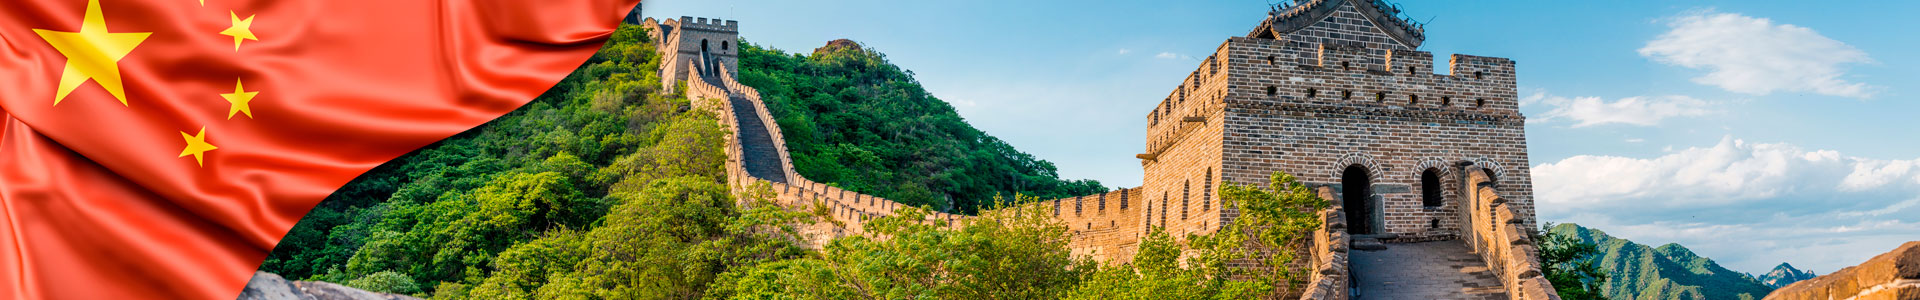 Bandera de China con vista panorámica de la Gran Muralla China